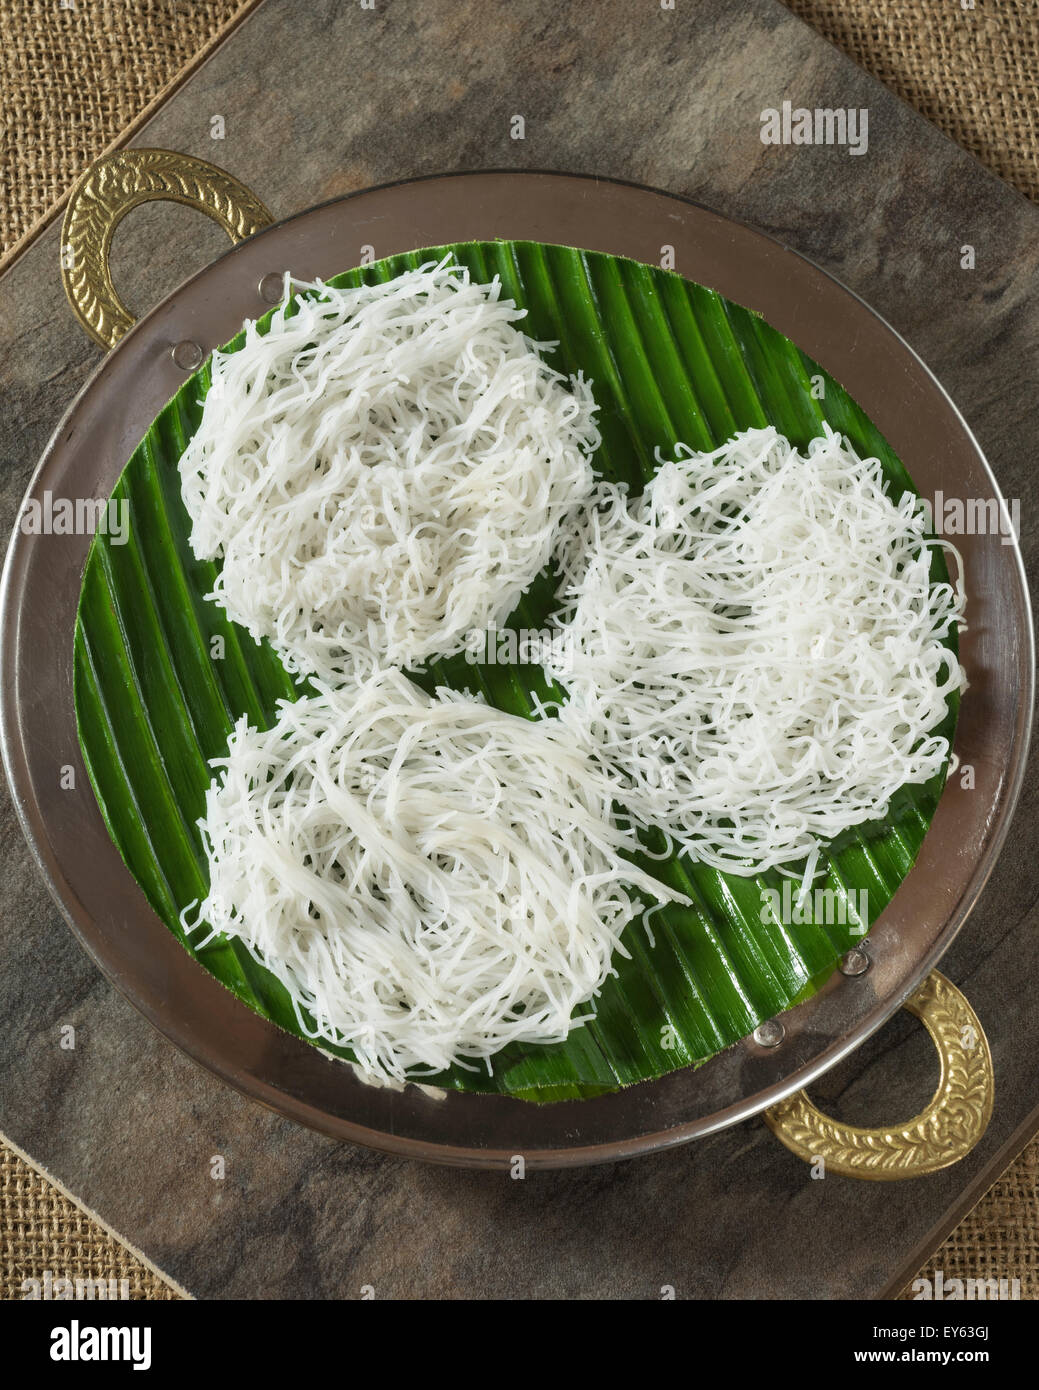 https://c8.alamy.com/comp/EY63GJ/string-hoppers-or-idiyappam-steamed-rice-flour-noodles-sri-lanka-and-EY63GJ.jpg